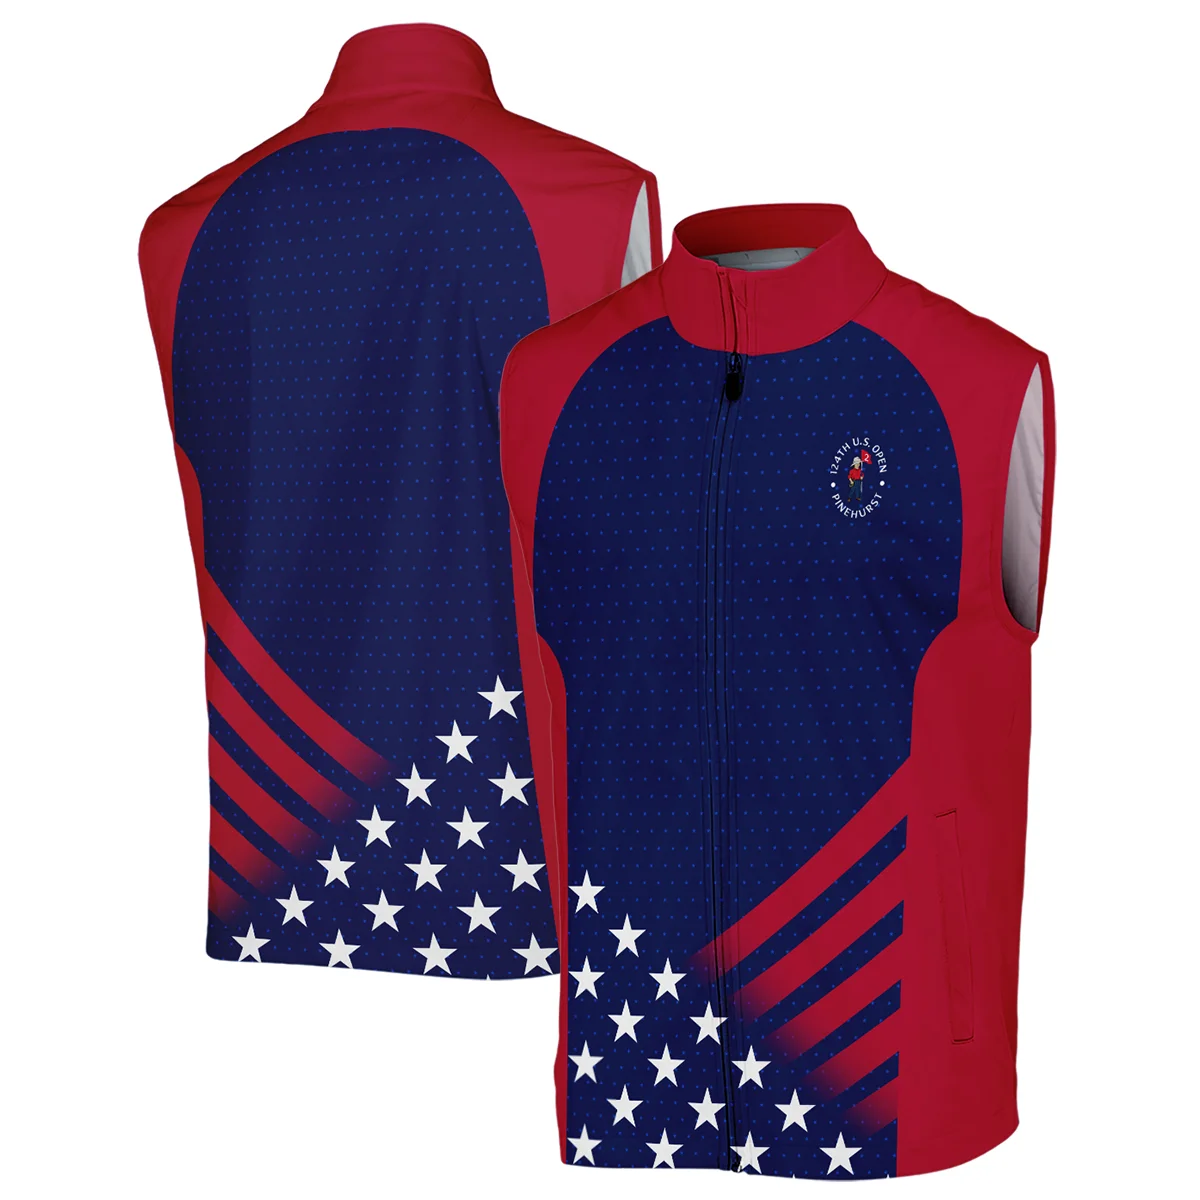 Callaway 124th U.S. Open Pinehurst Star White Dark Blue Red Background Polo Shirt Mandarin Collar Polo Shirt